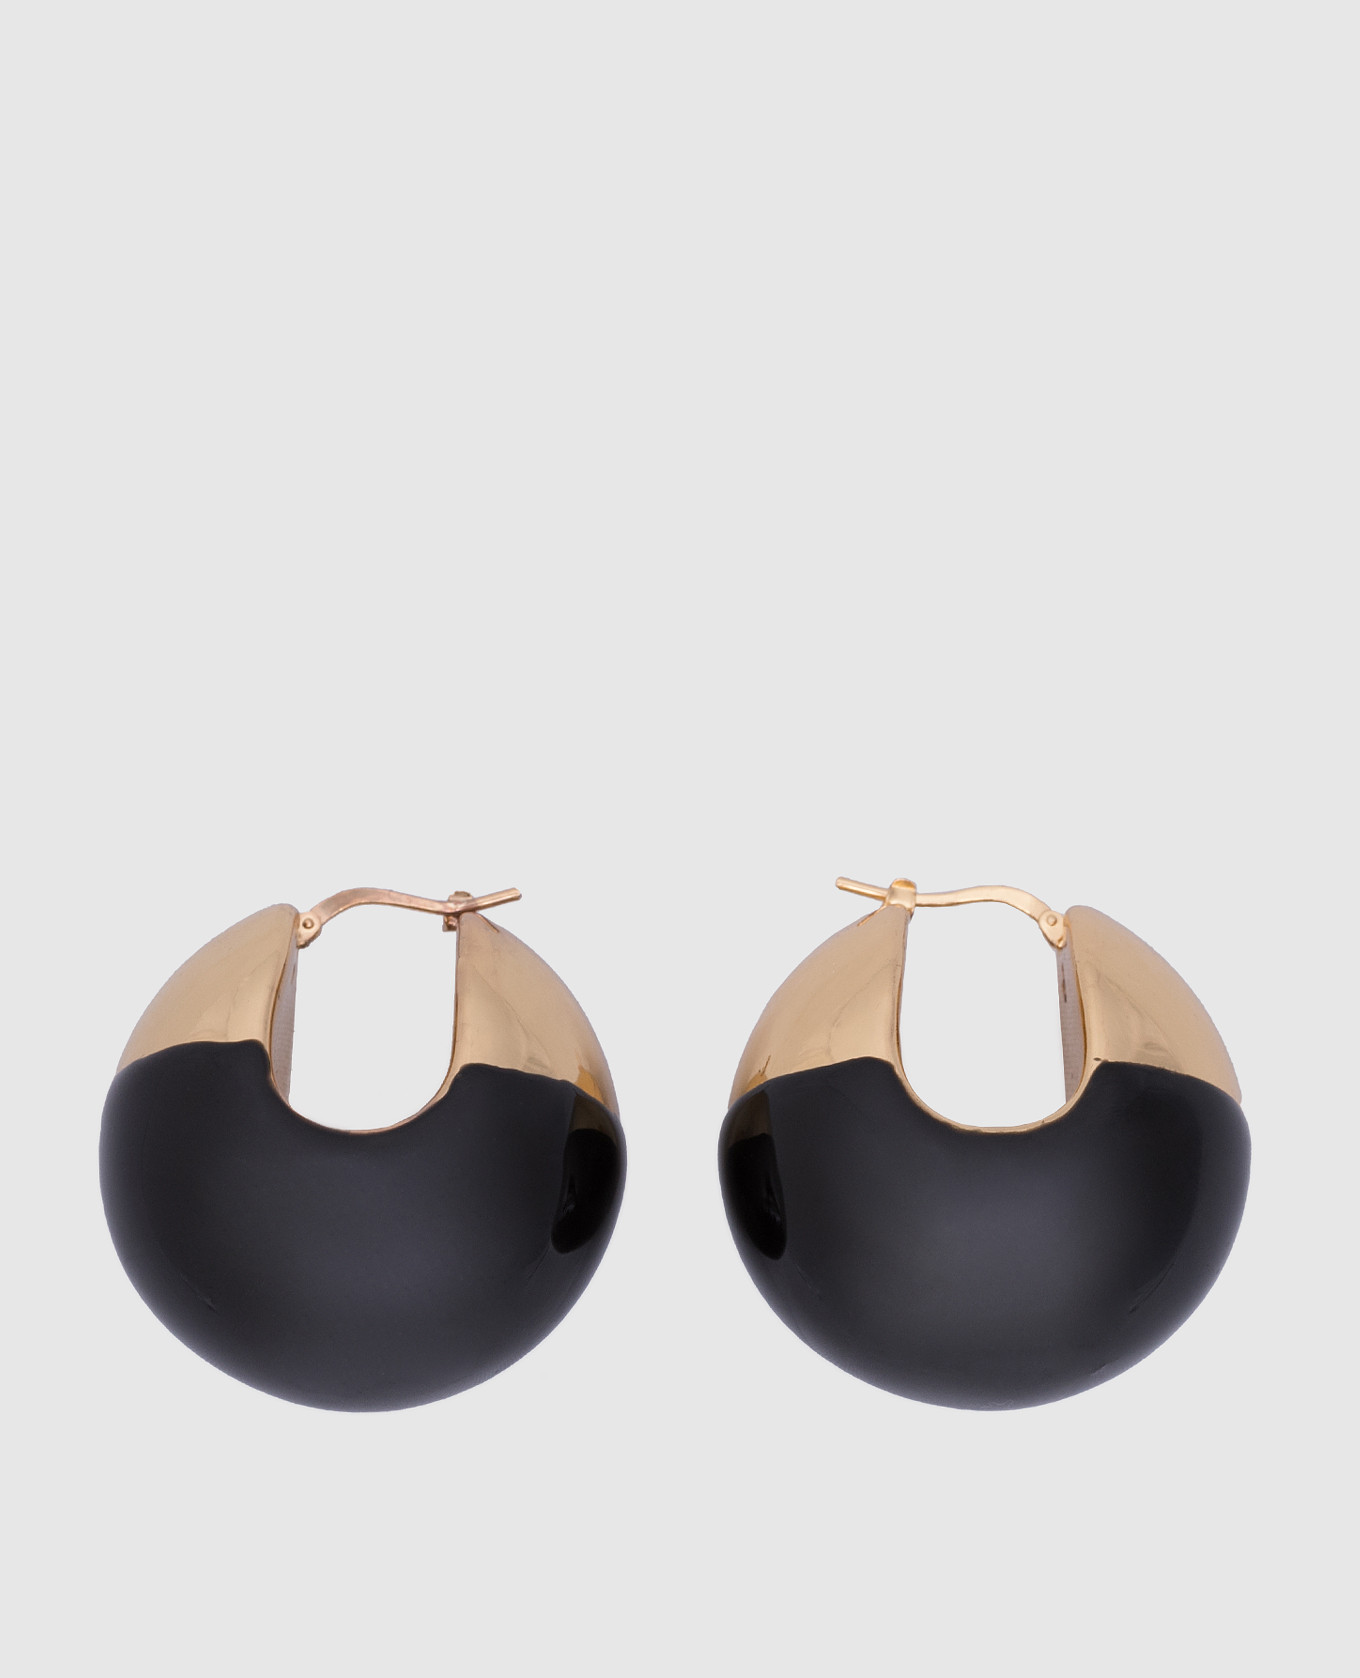 Black Boule earrings with 24k gold plating